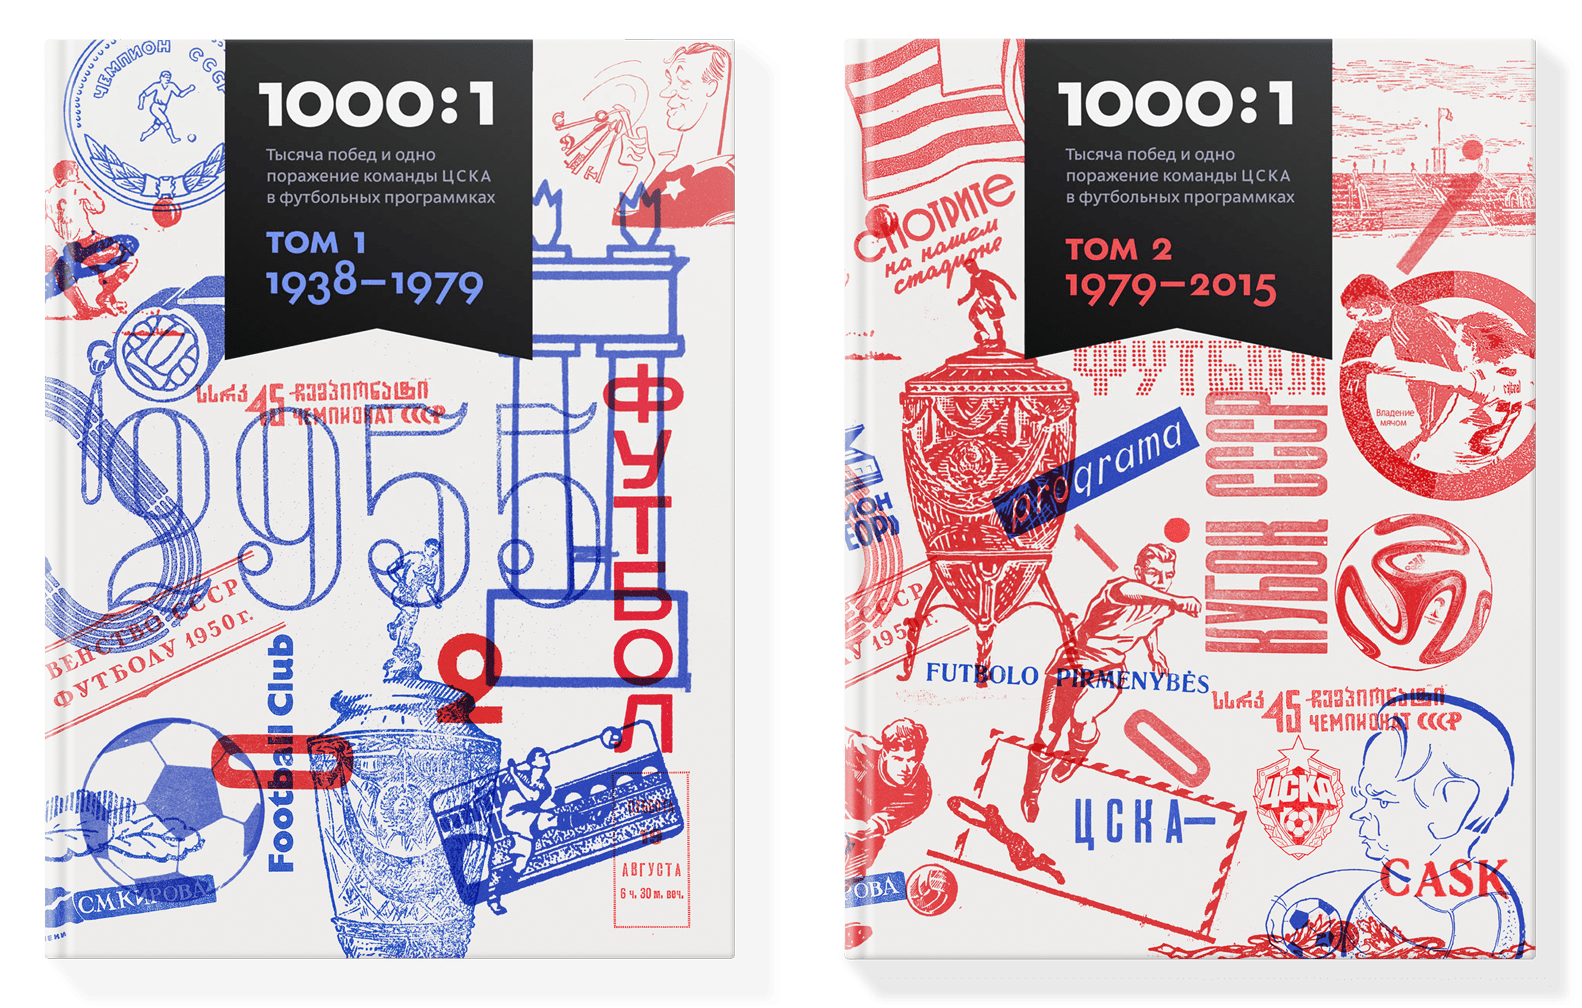 1001 programmka 2 covers